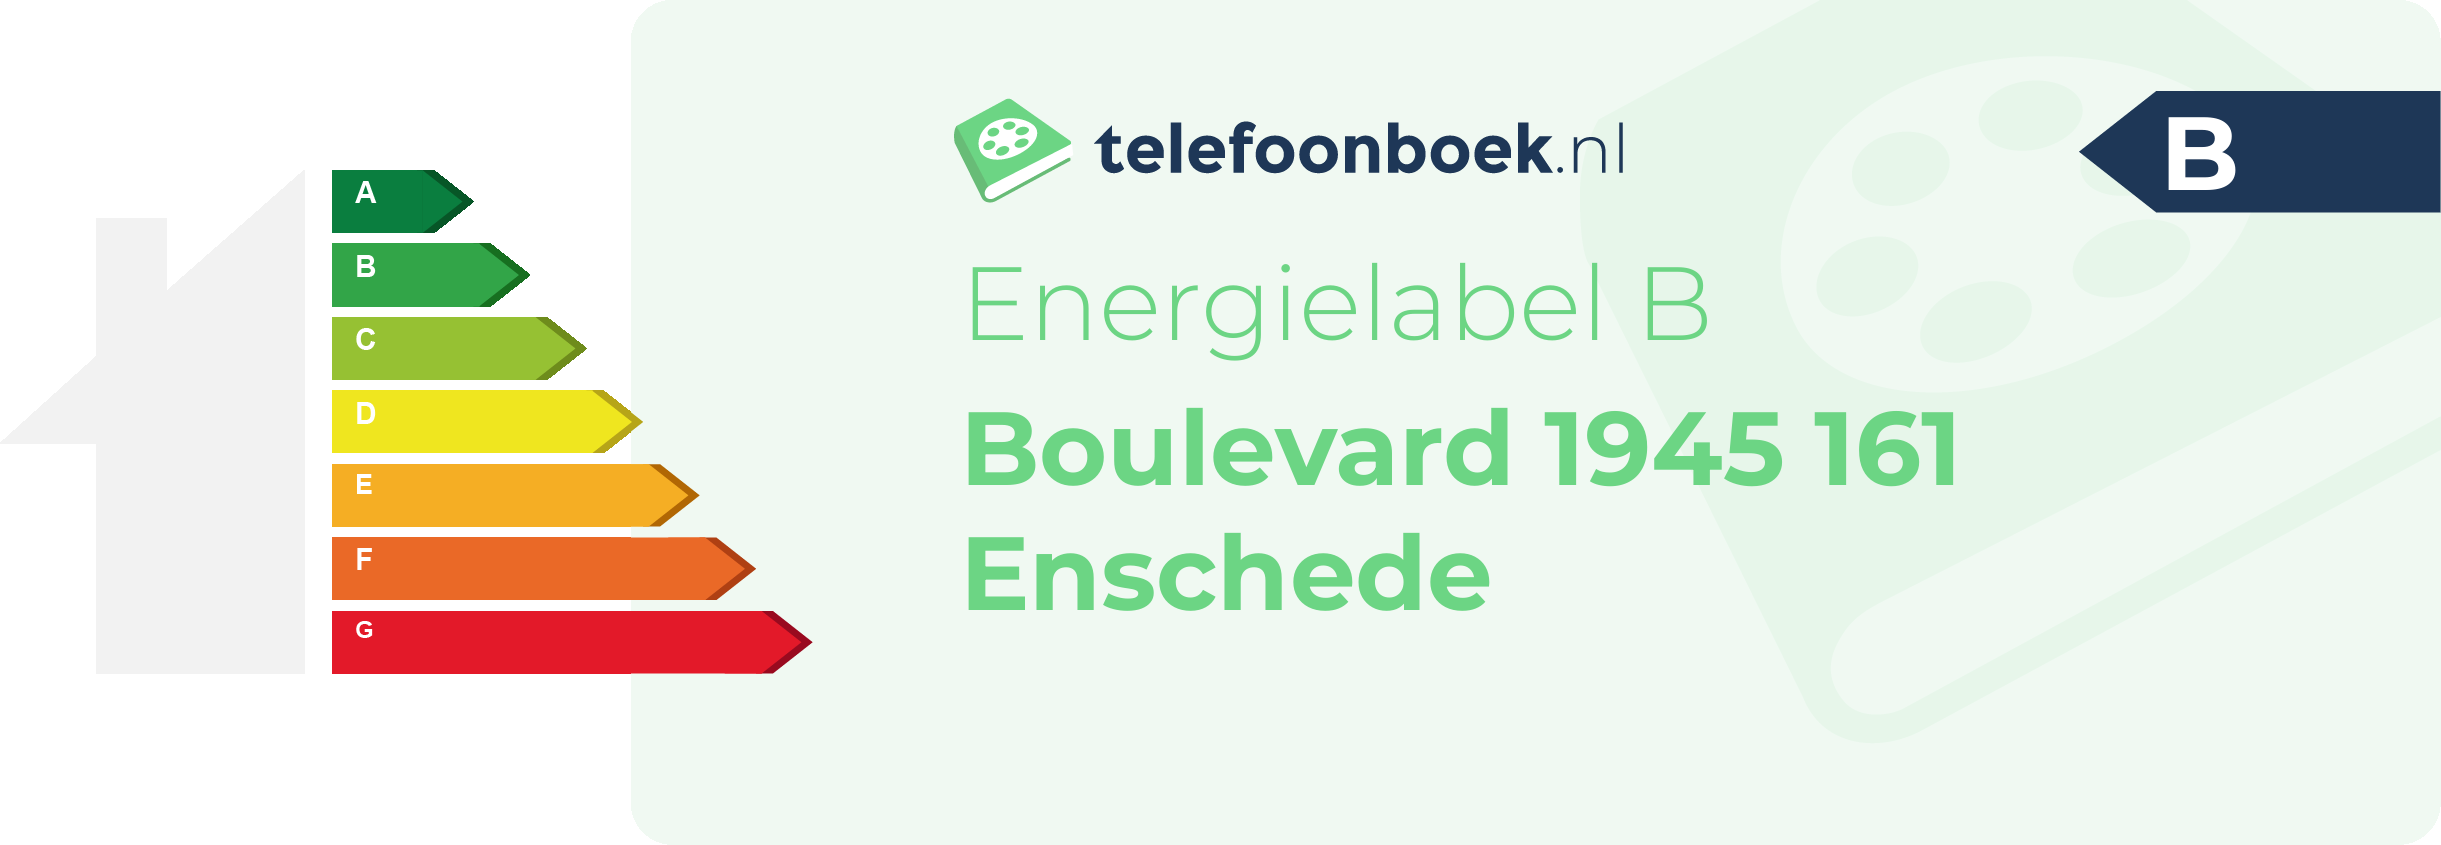 Energielabel Boulevard 1945 161 Enschede